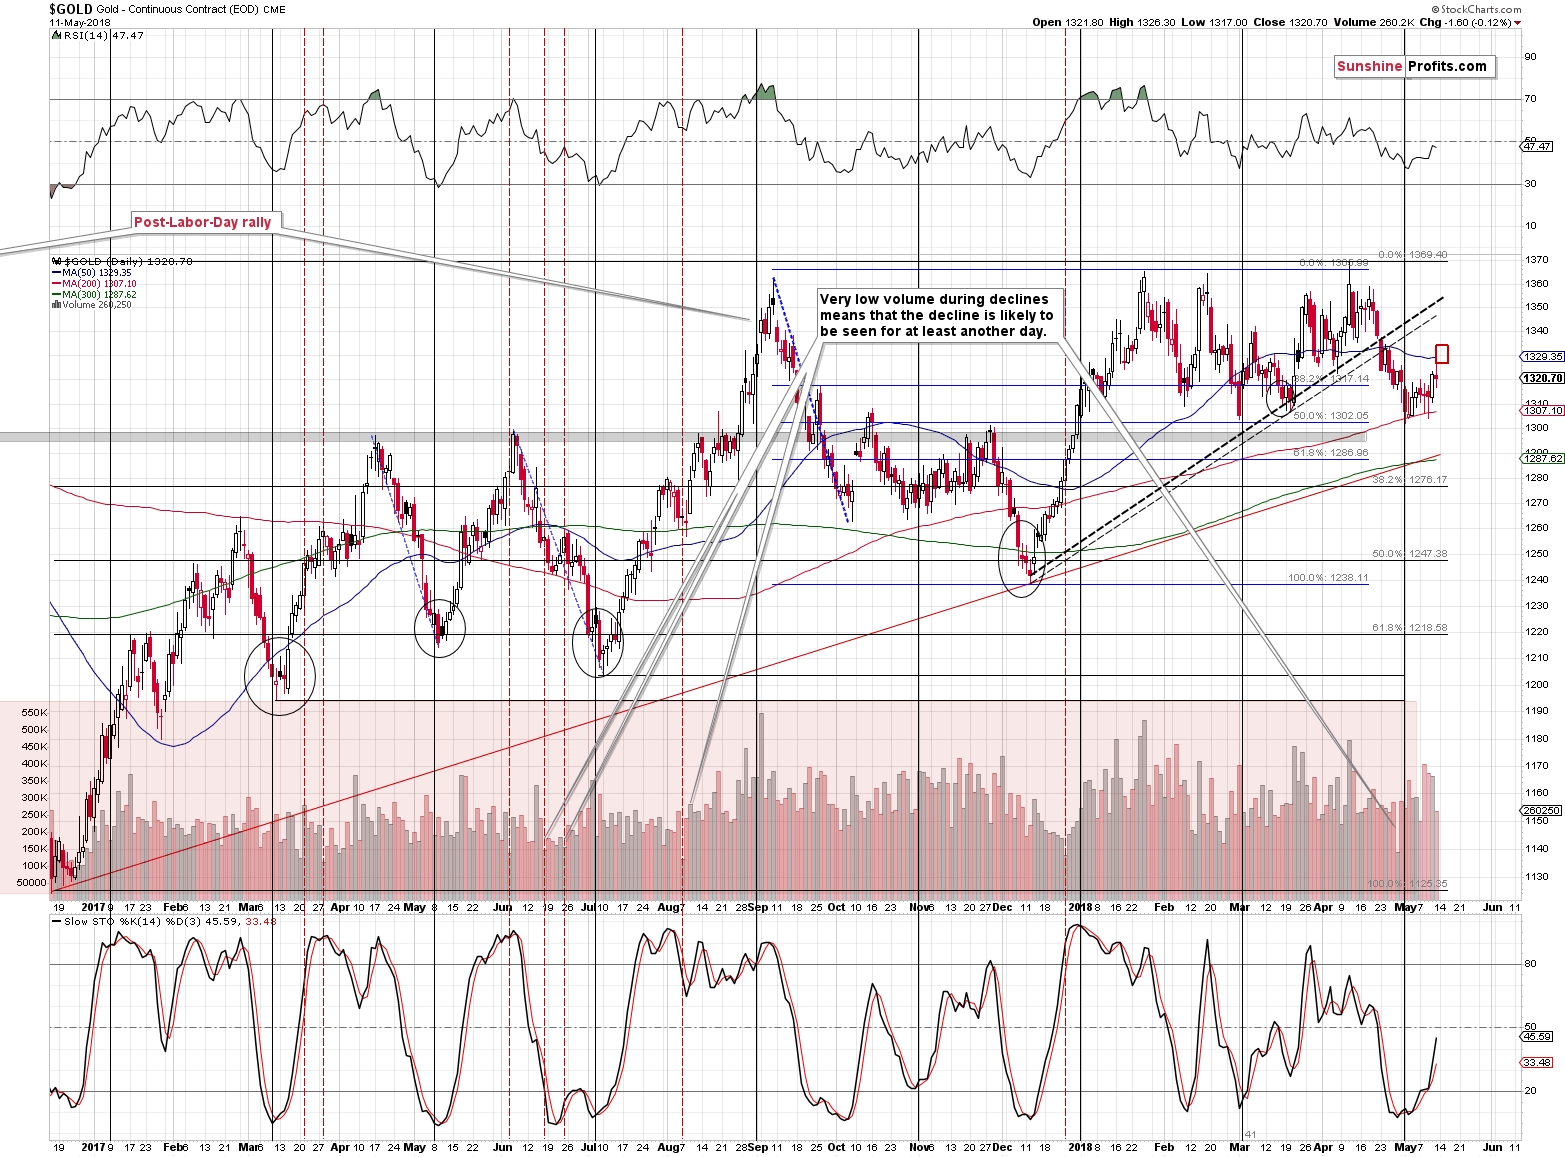 Gold short-term price chart - Gold spot price